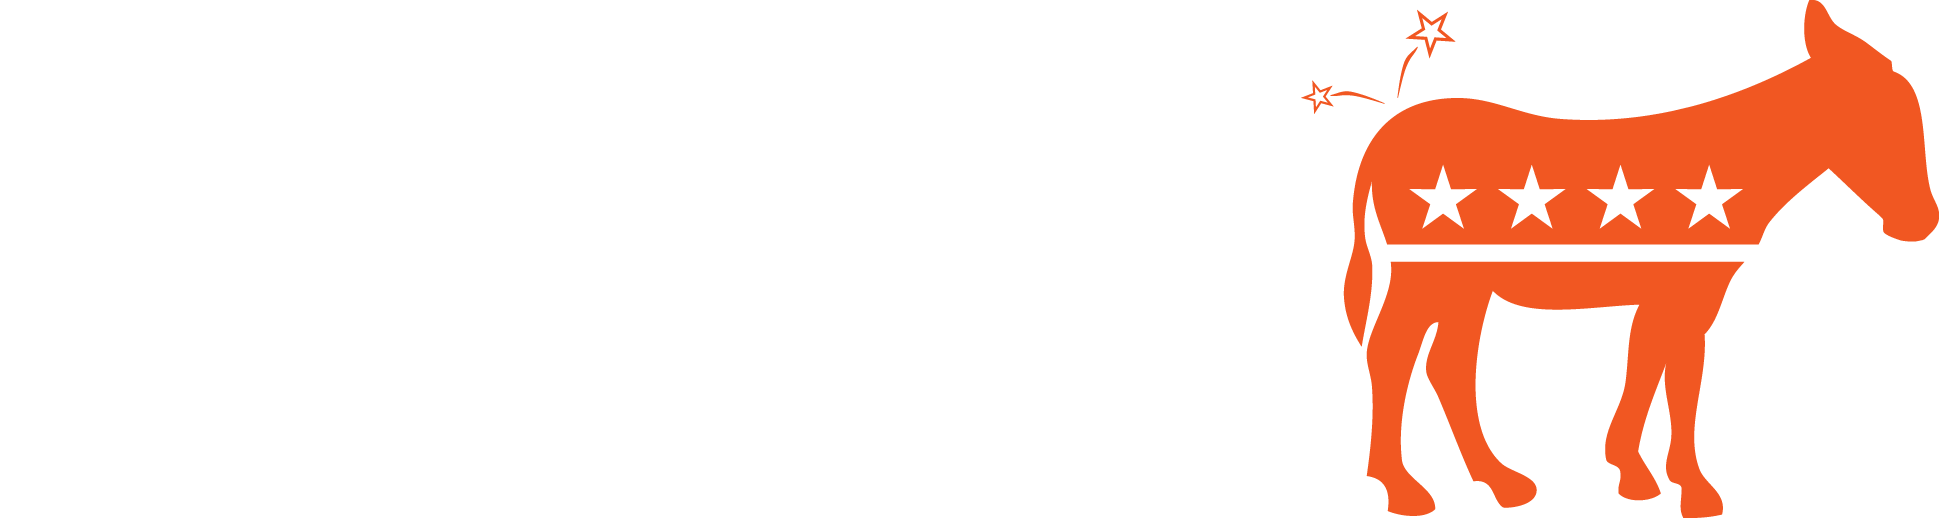 We Kick Ass inverted